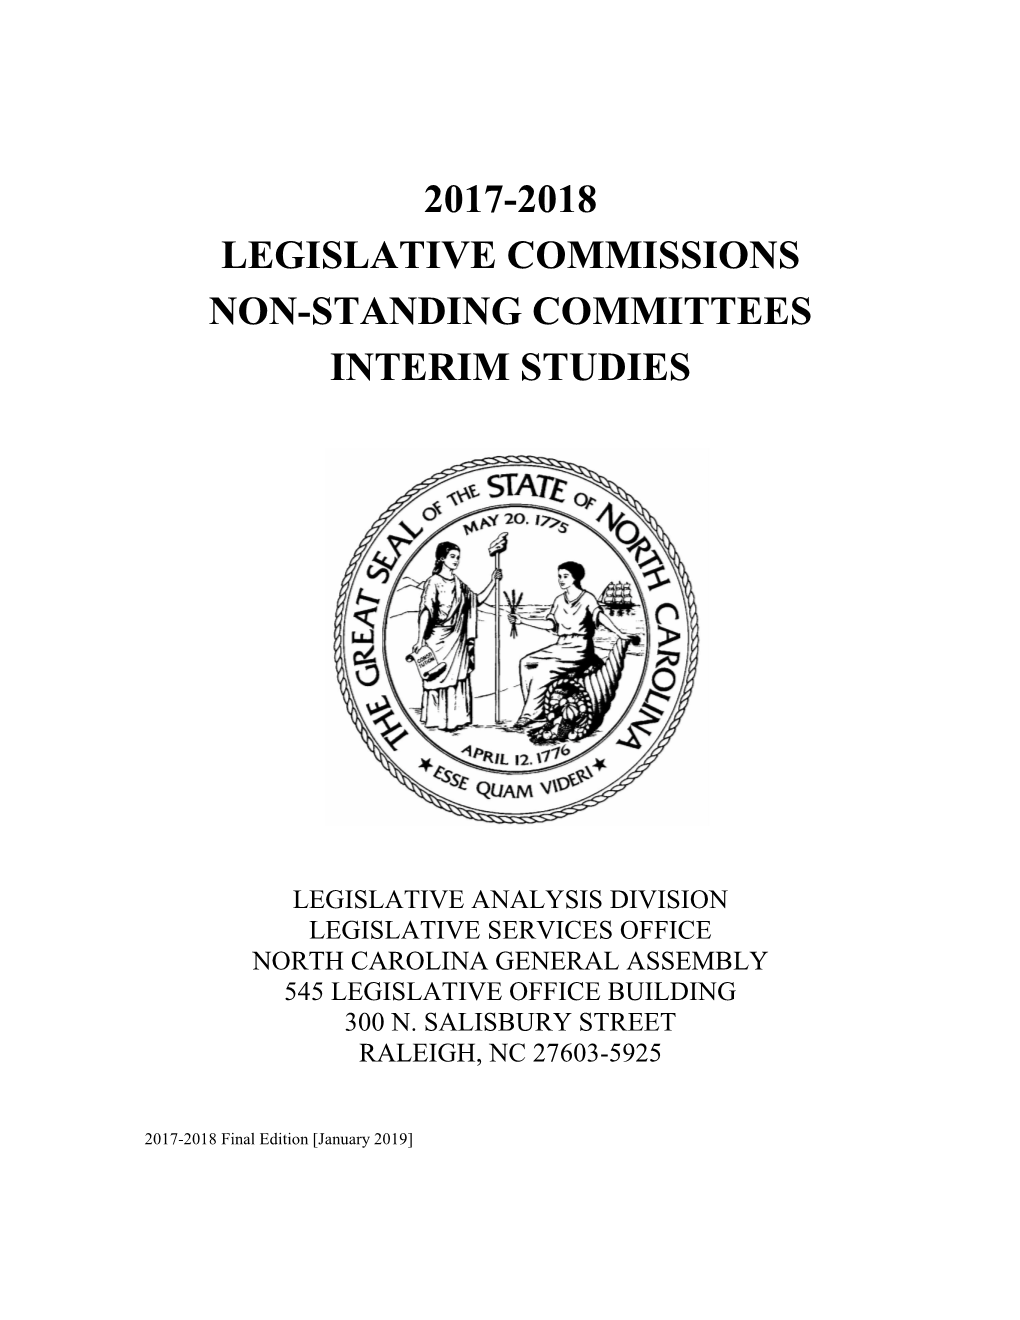 2017-2018 Legislative Commissions Non-Standing Committees Interim Studies